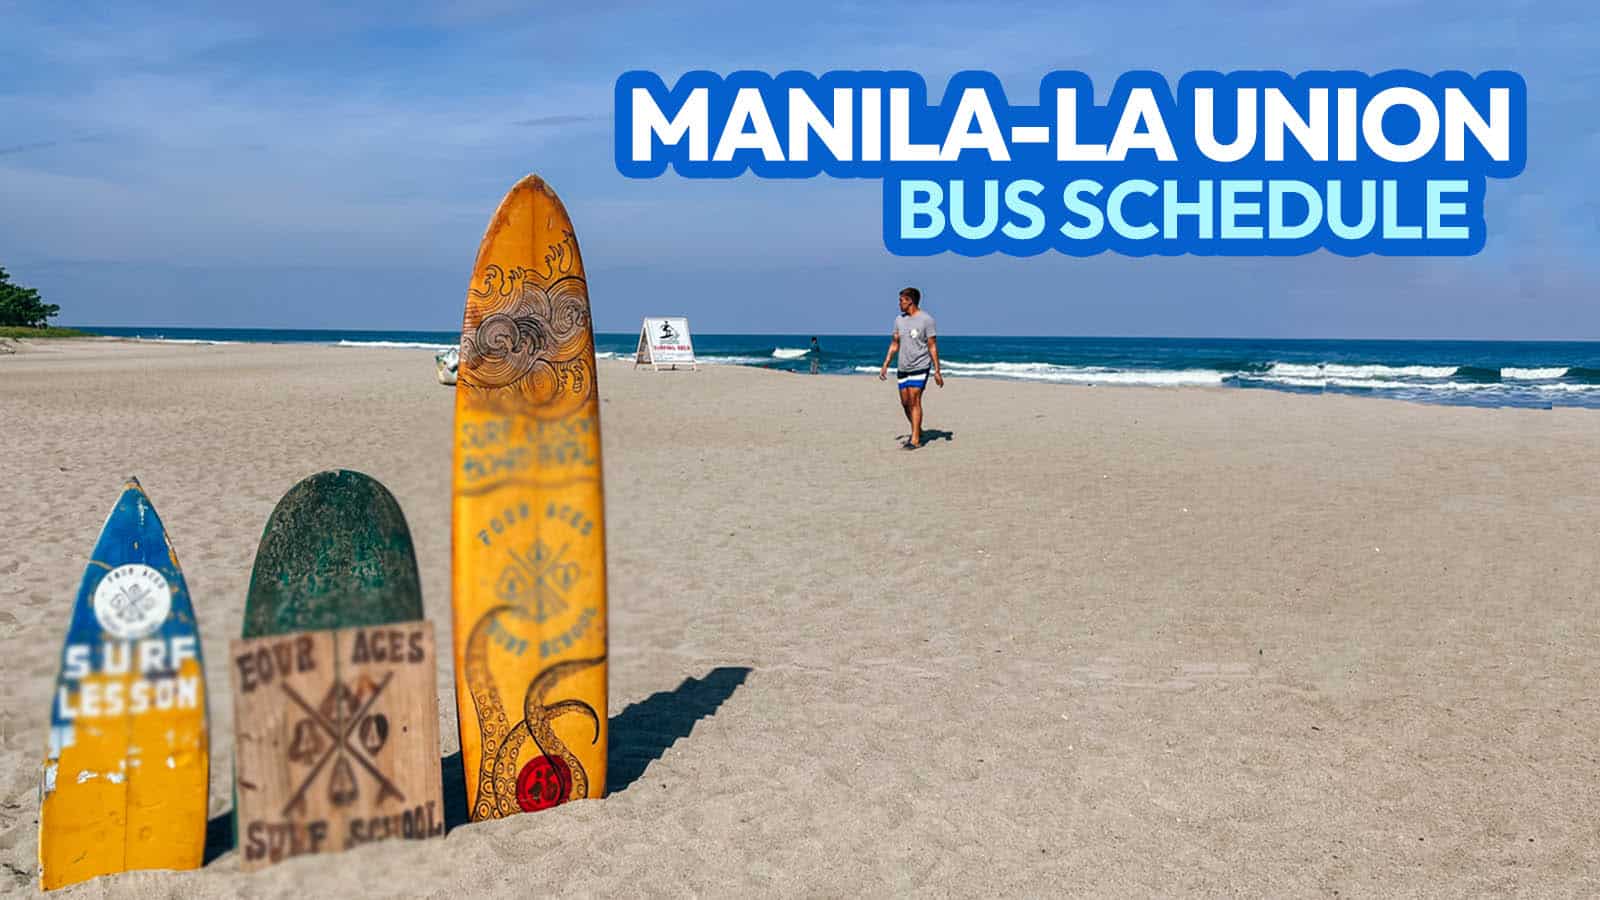 MANILA TO LA UNION Bus Schedule (Partas & Viron Transit)